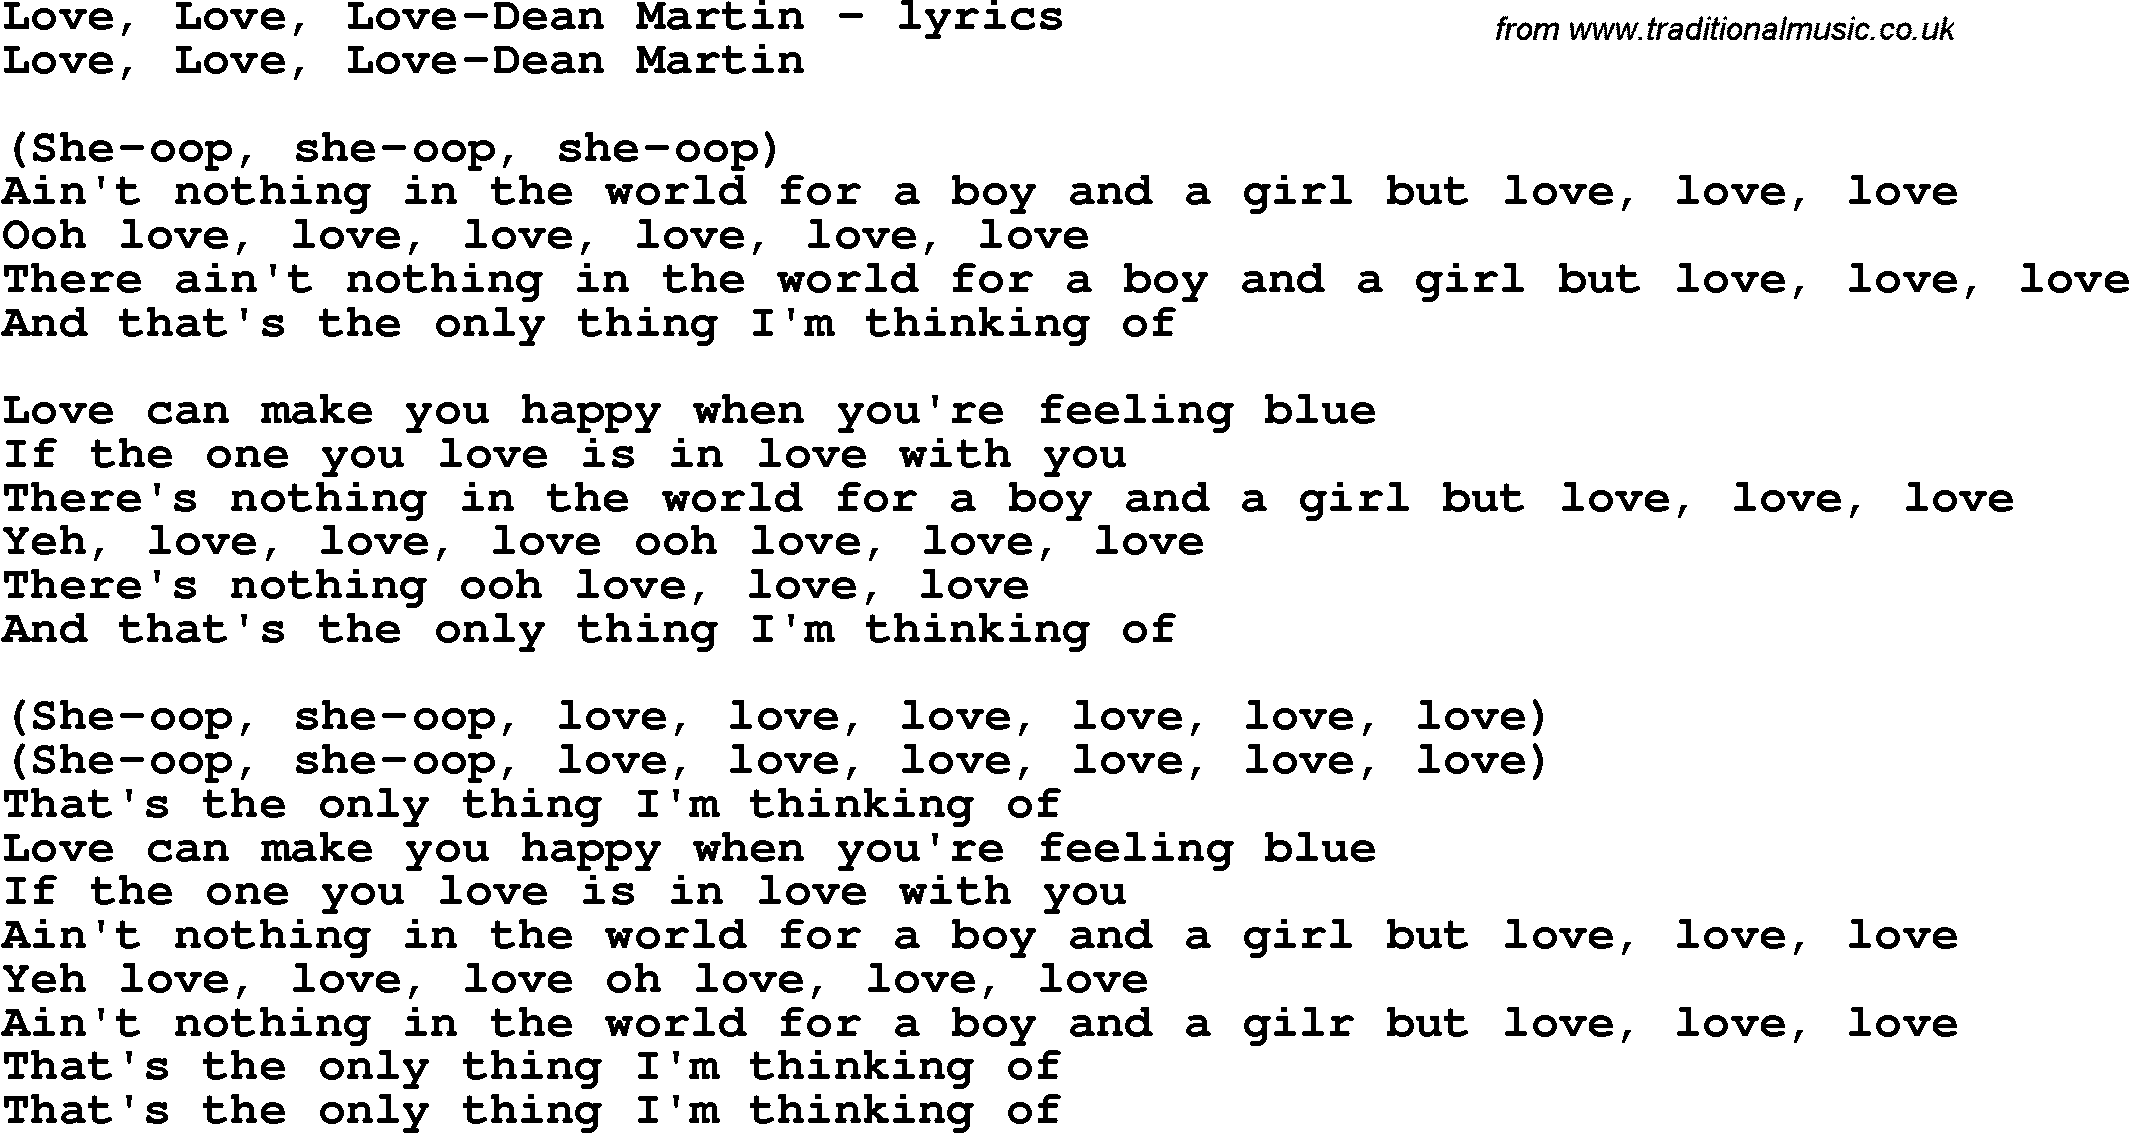 Love Song Lyrics for: Love, Love, Love-Dean Martin